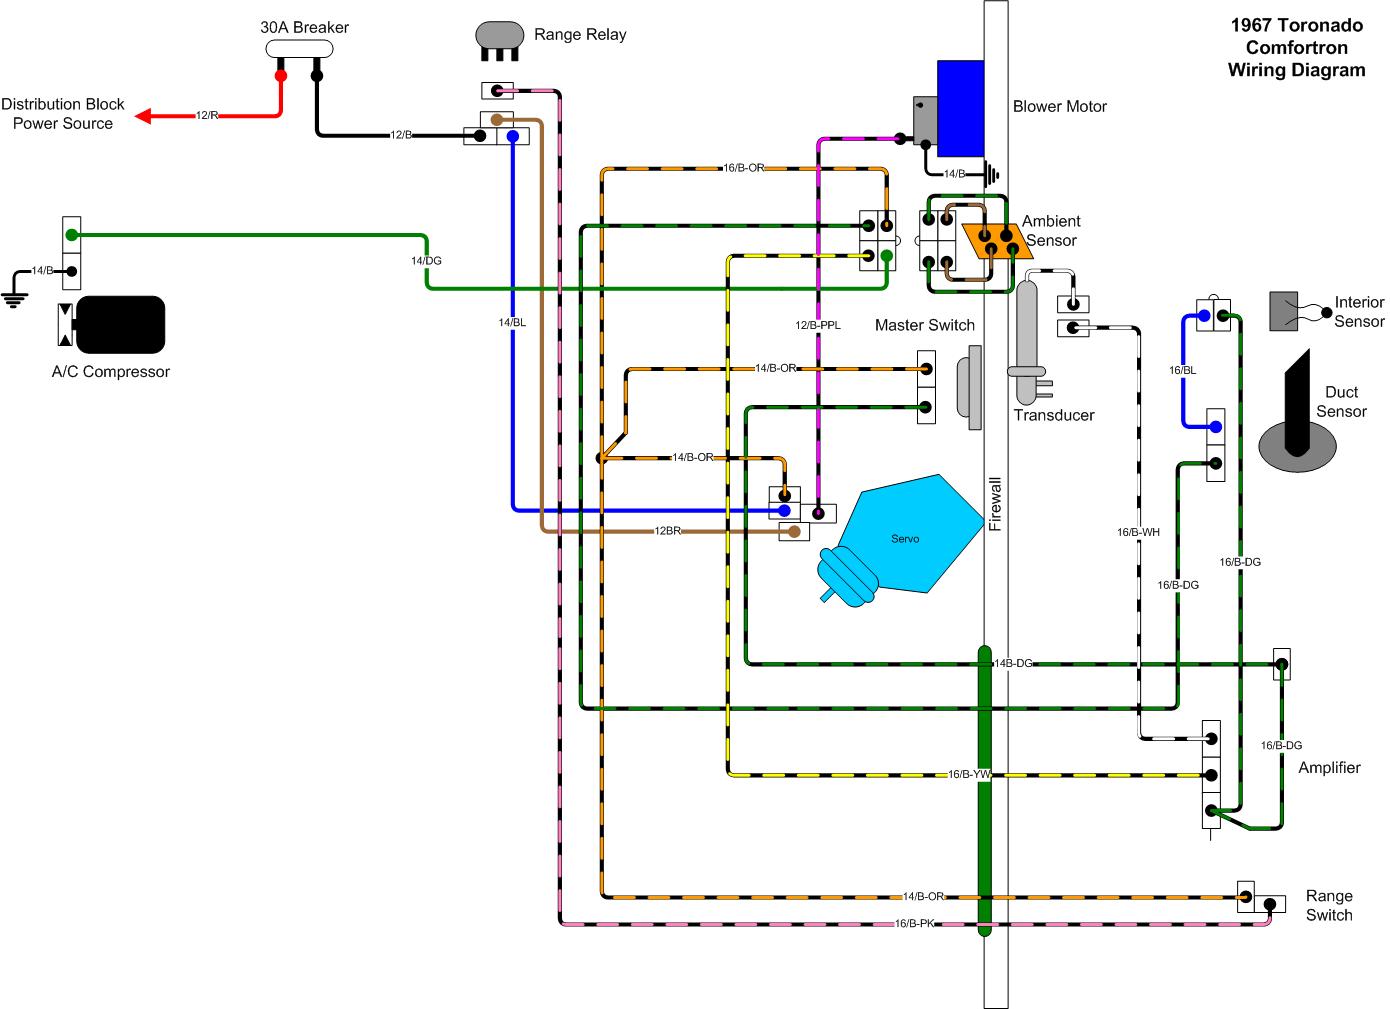 Toronado Comfortron Wiring Diagram.jpg